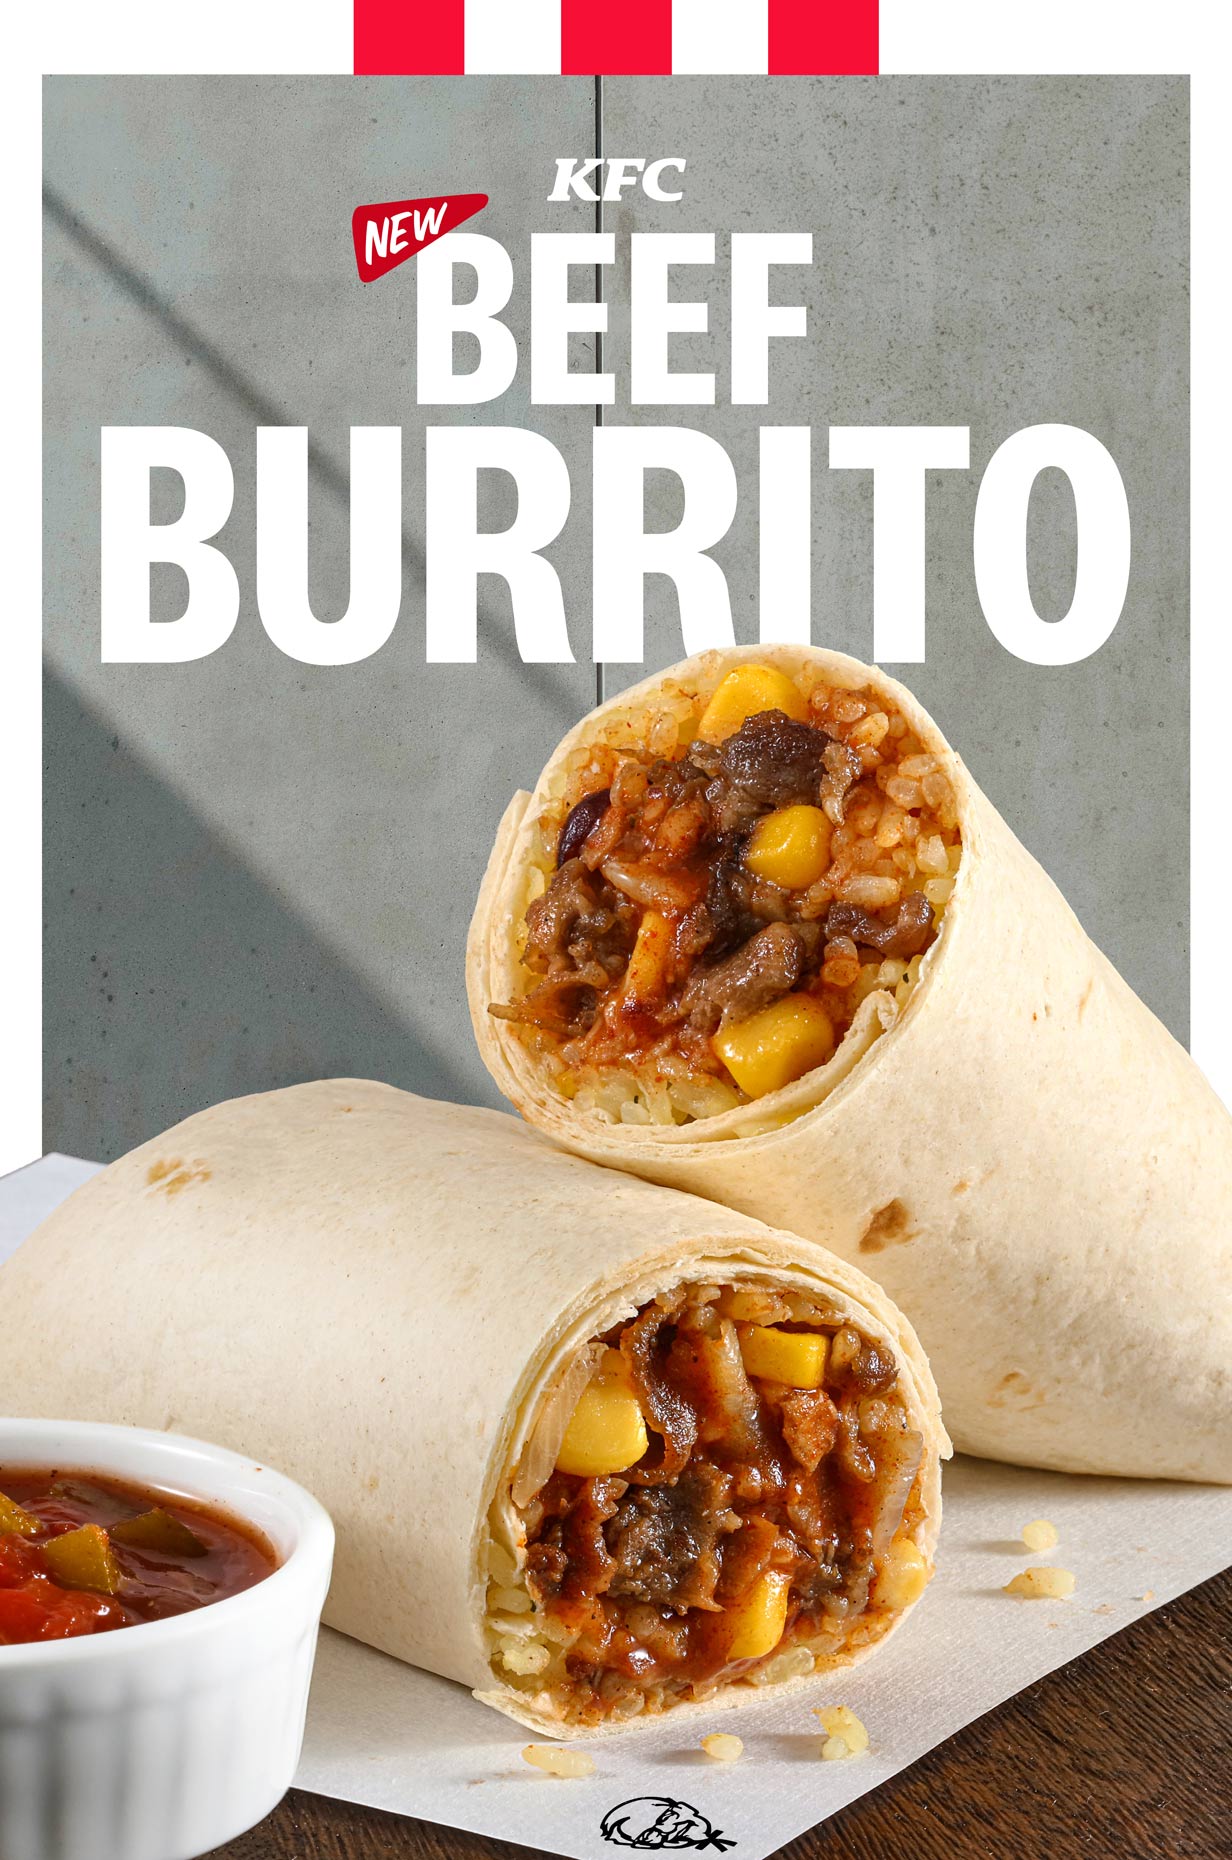 KFC-Beef-Burrito